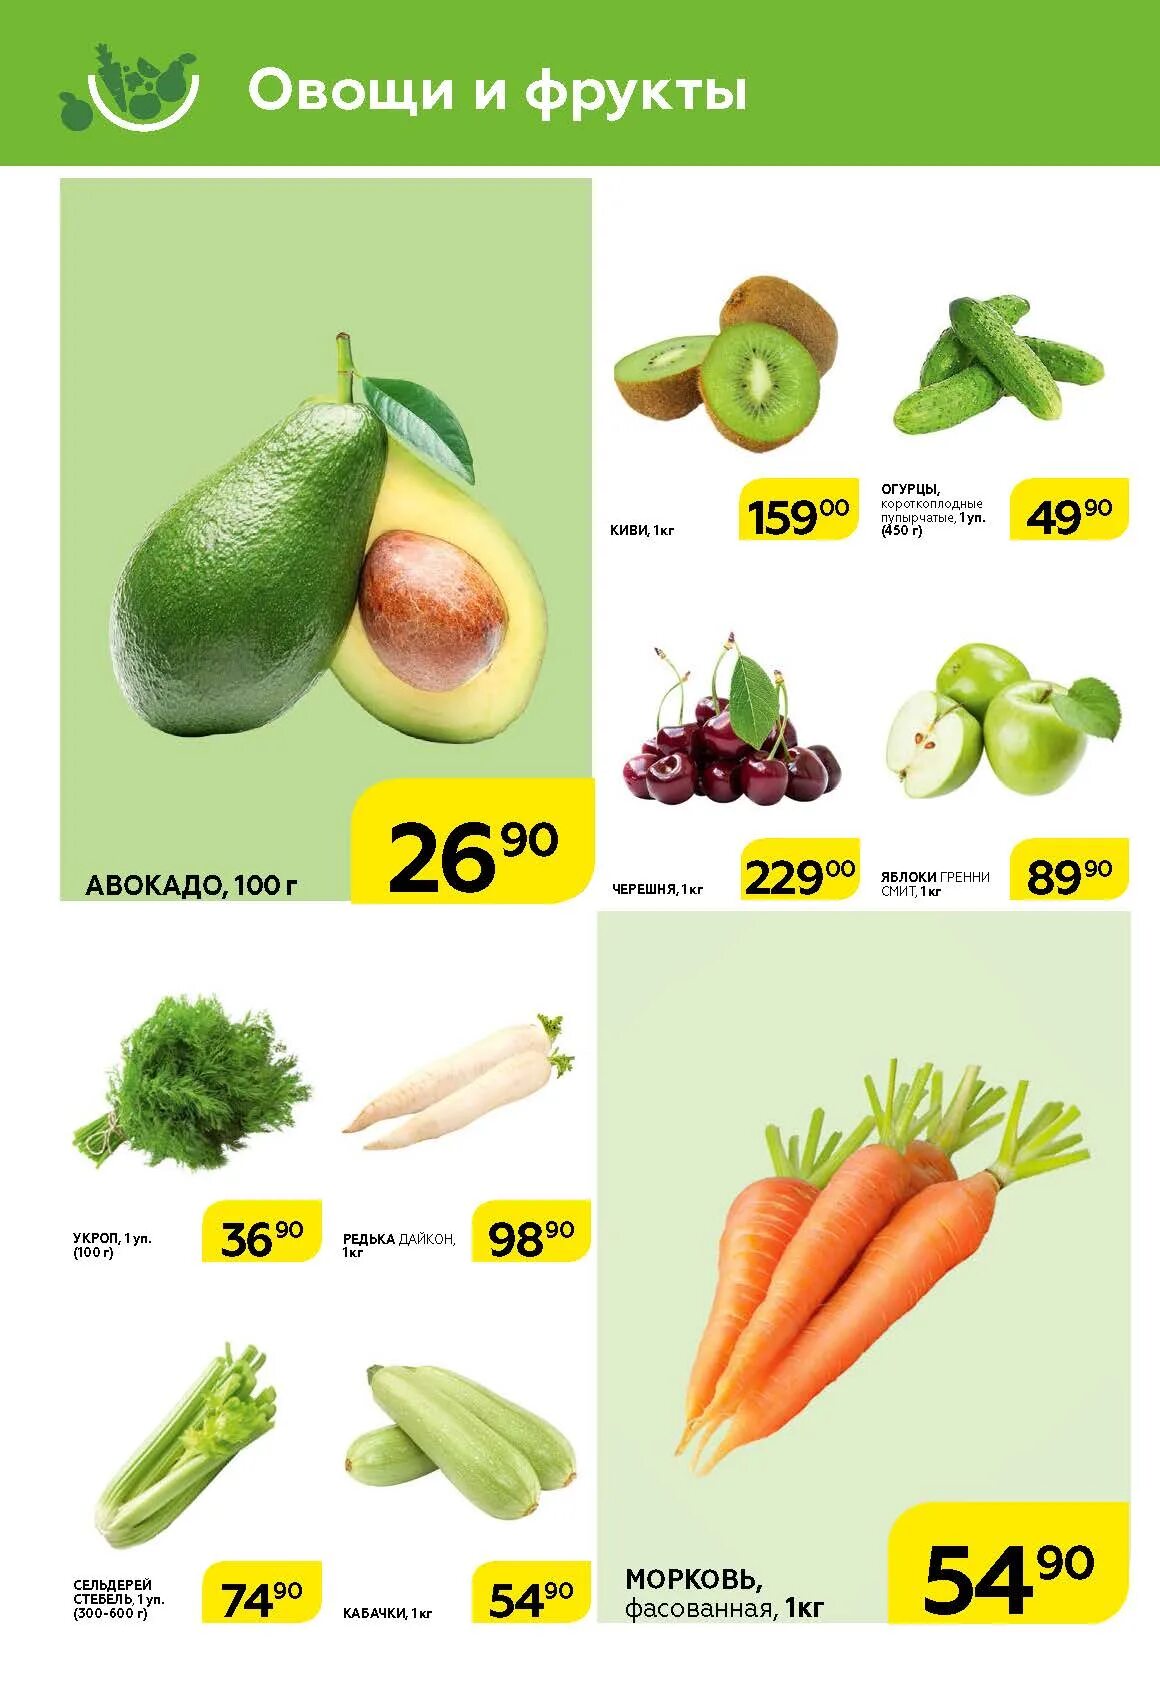 Киви 1 кг. Магниты «овощи». Магнит товары овощи. Магнит фрукты и овощи каталог. Овощи в магазине магнит.